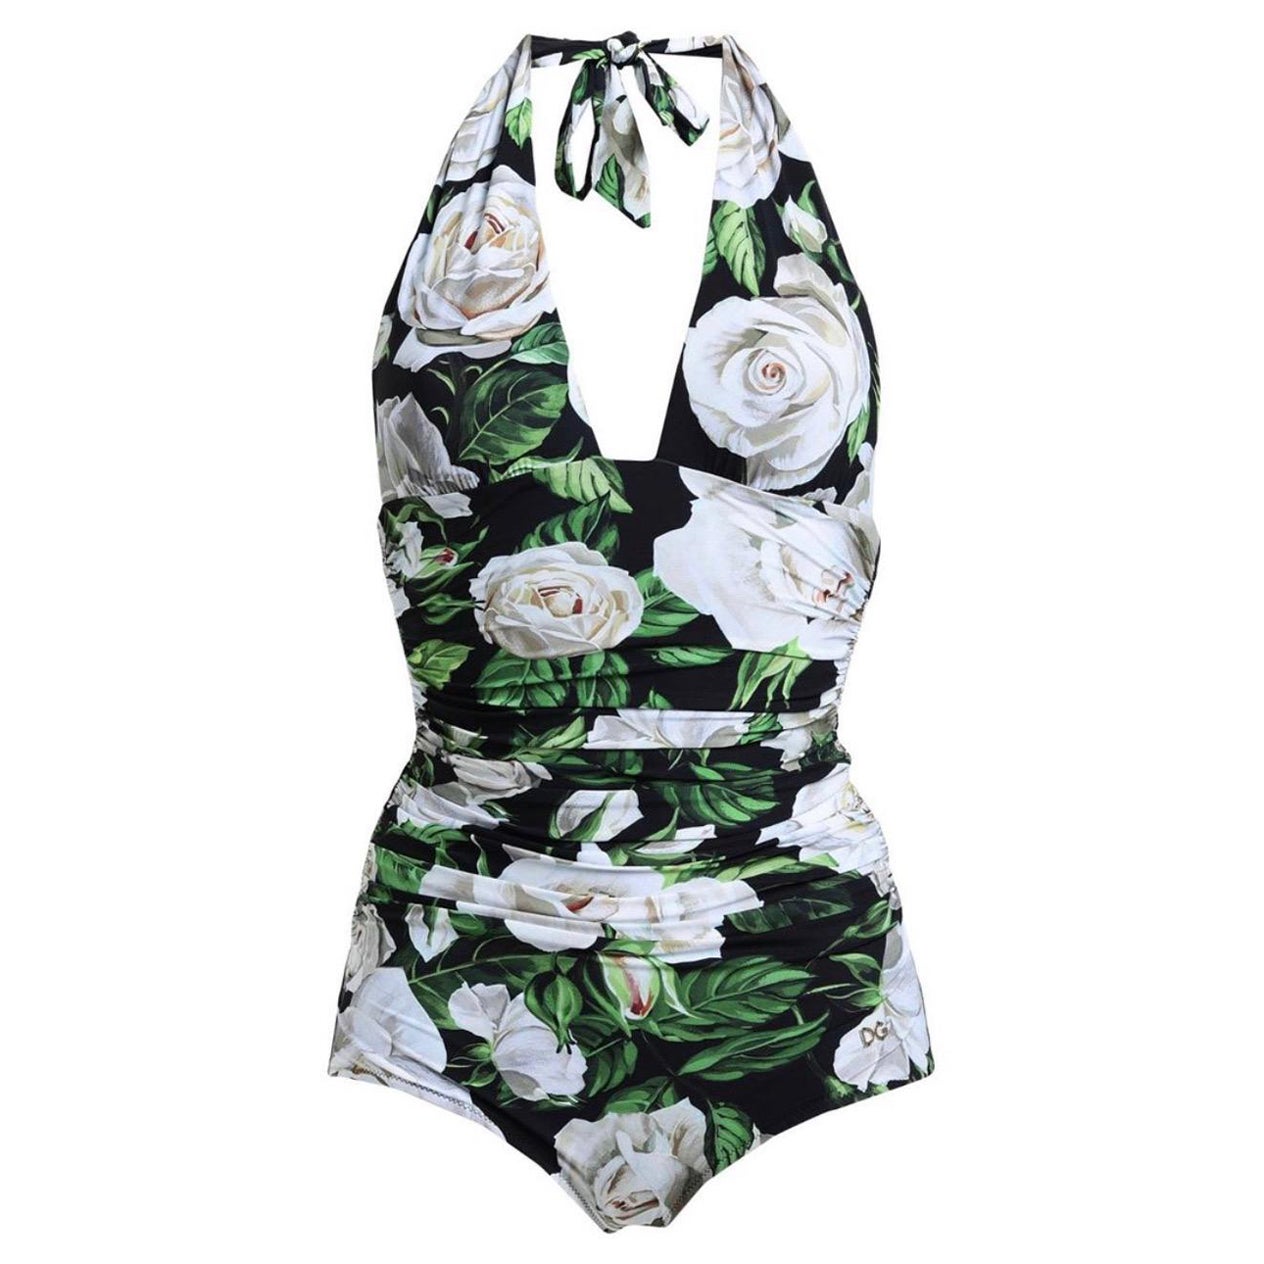 Dolce & Gabbana one
piece swimsuit Black white Roses print bikini